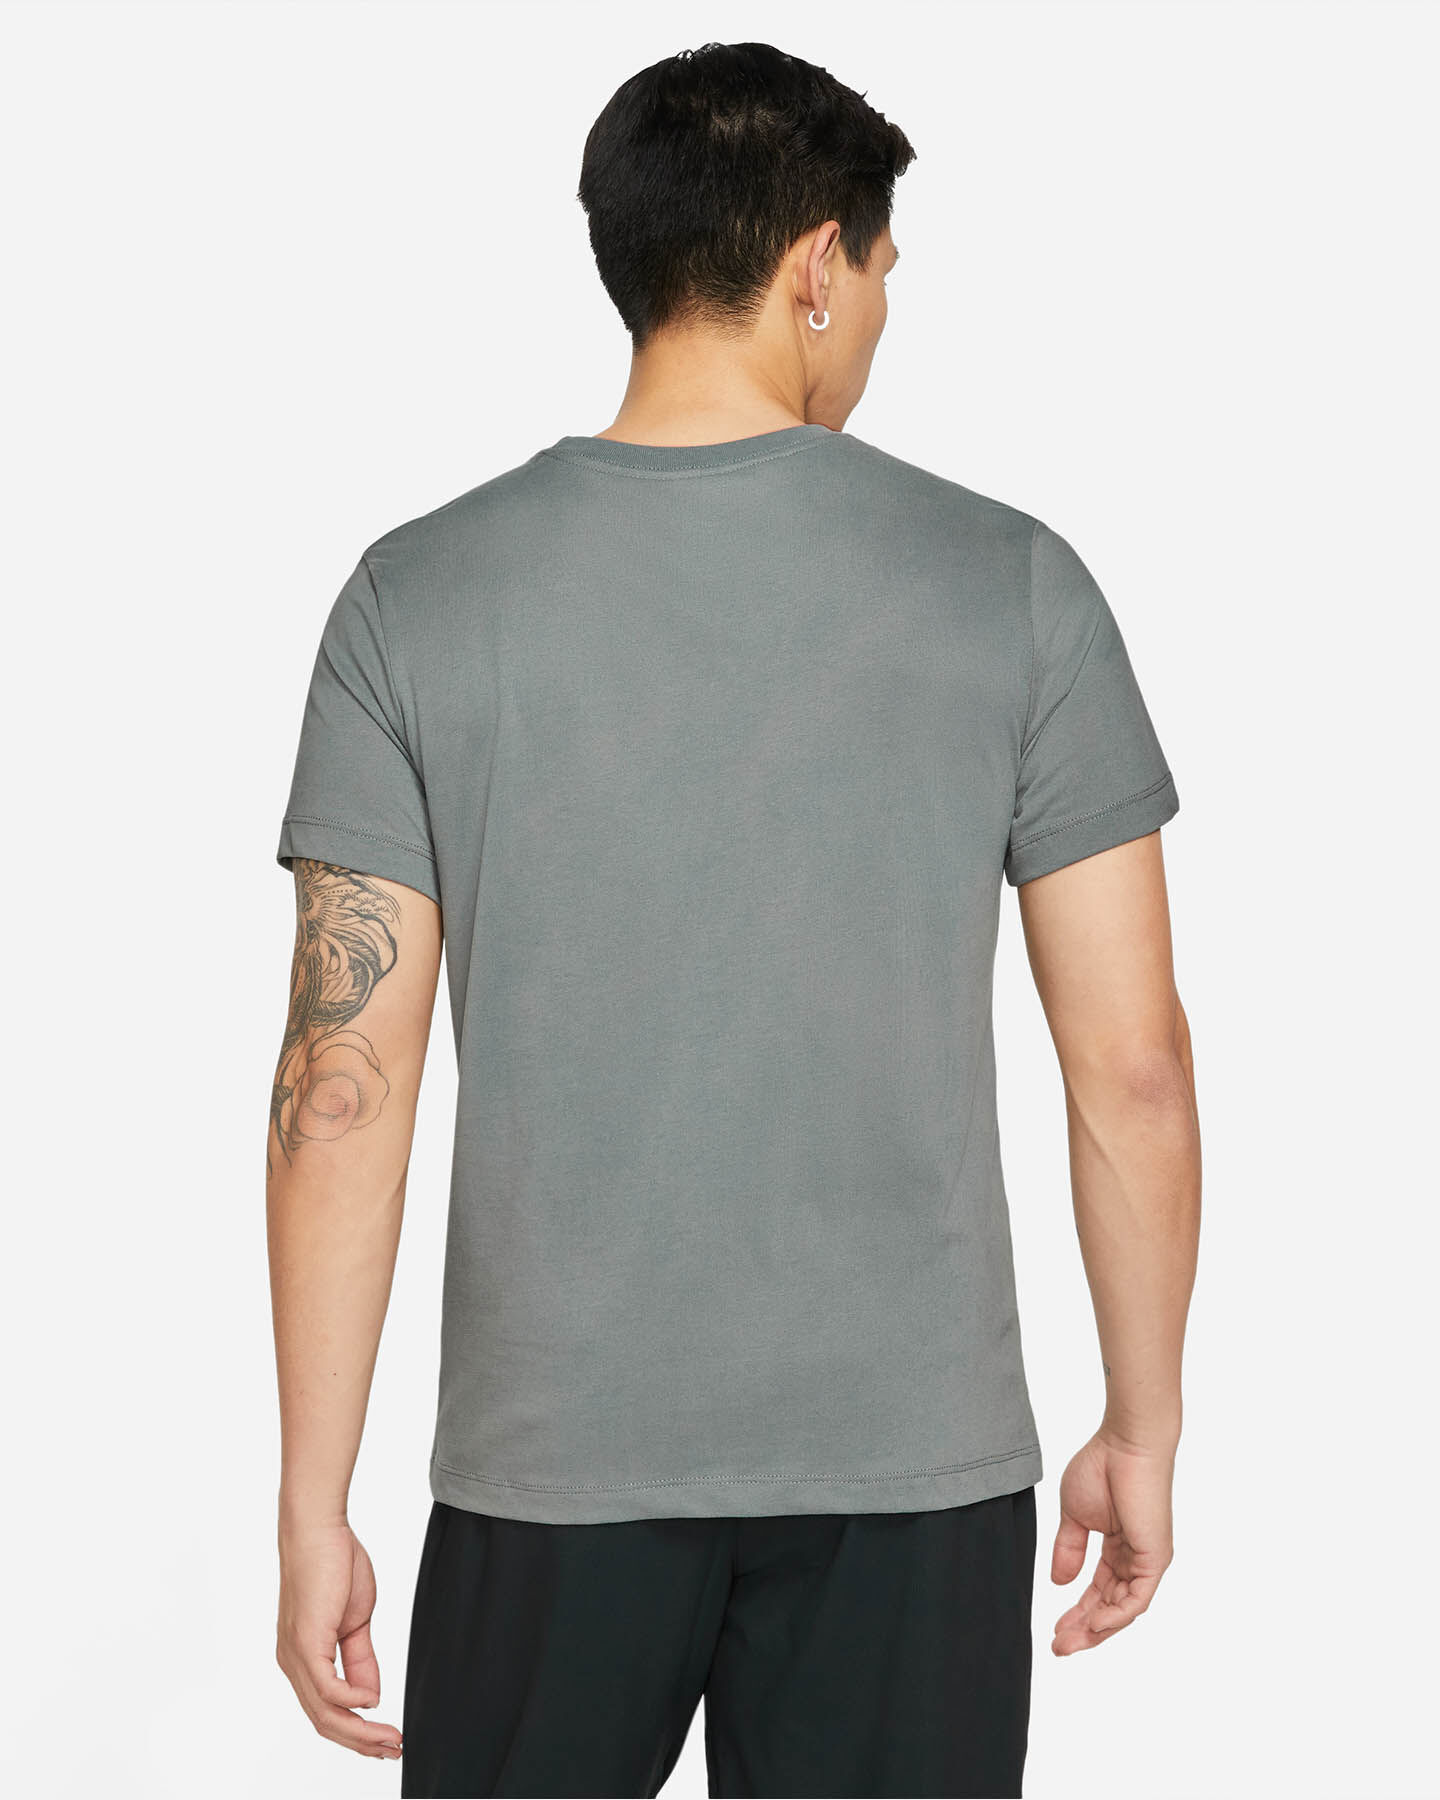  T-Shirt running NIKE DRI FIT TRAIL M S5320706|084|S scatto 1